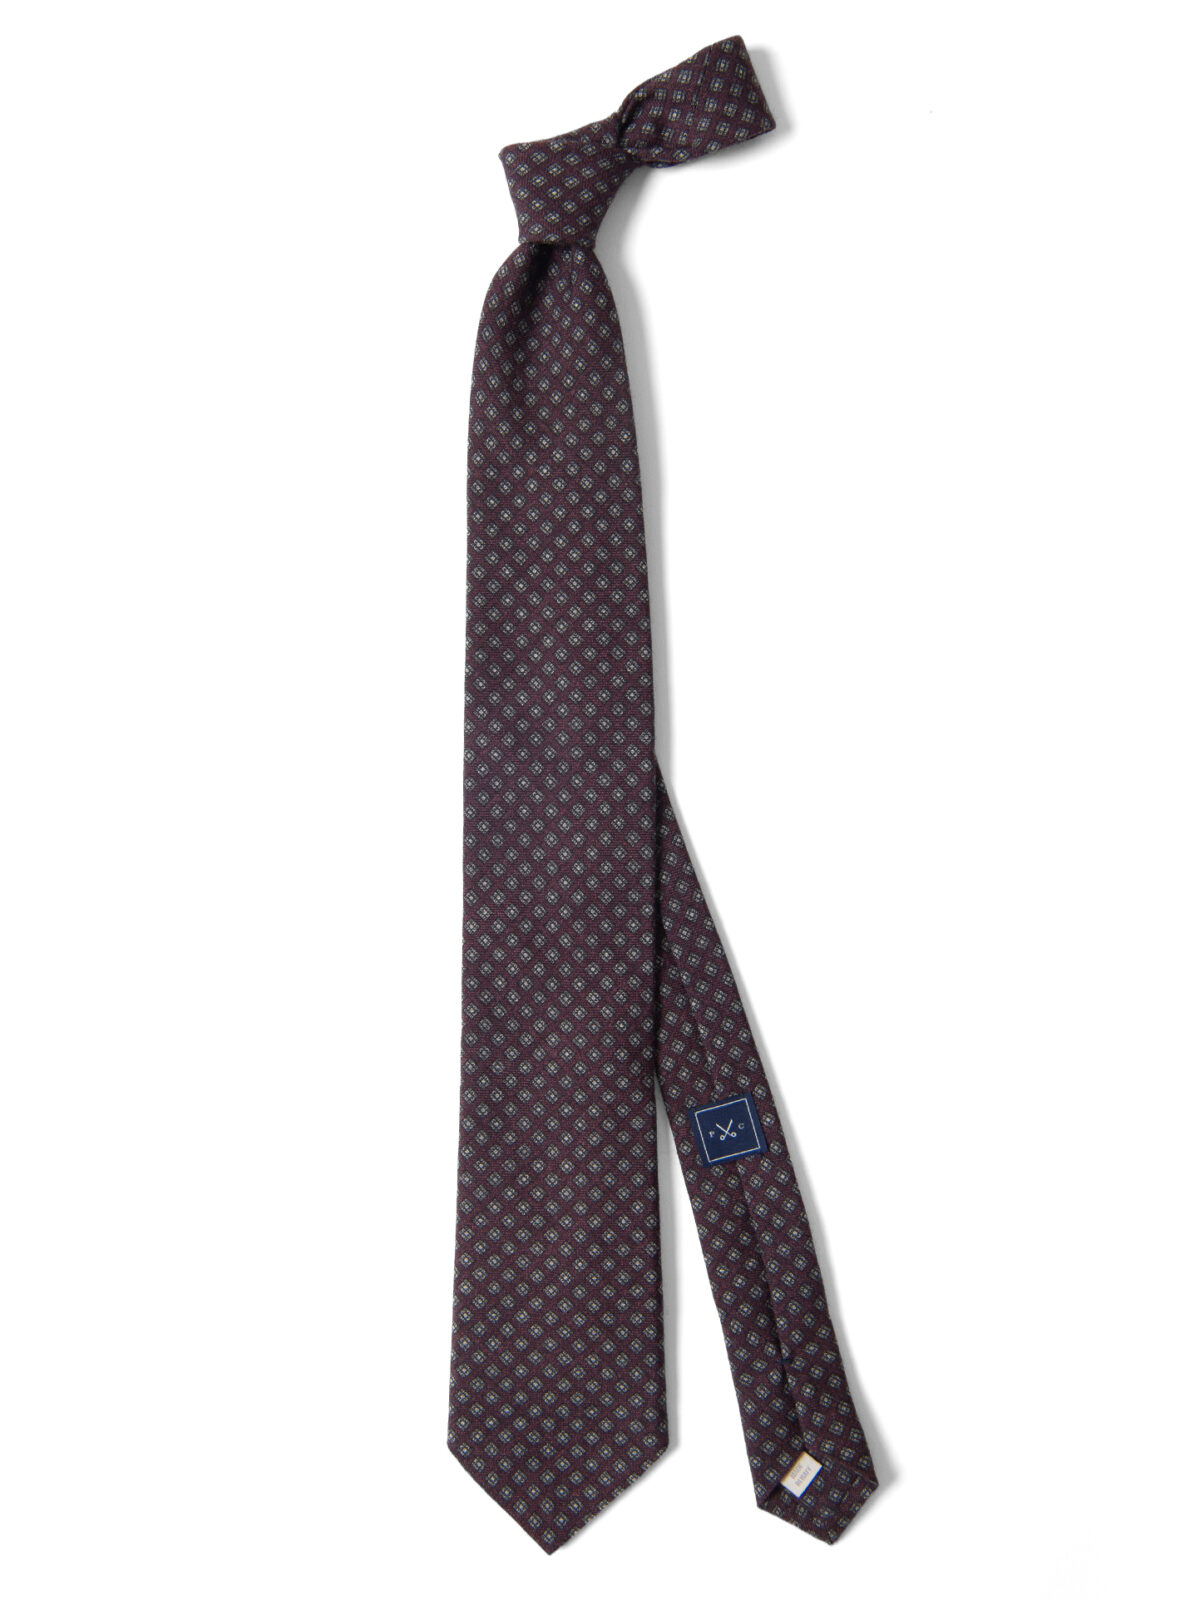 Scarlet and Grey Foulard Wool Tie